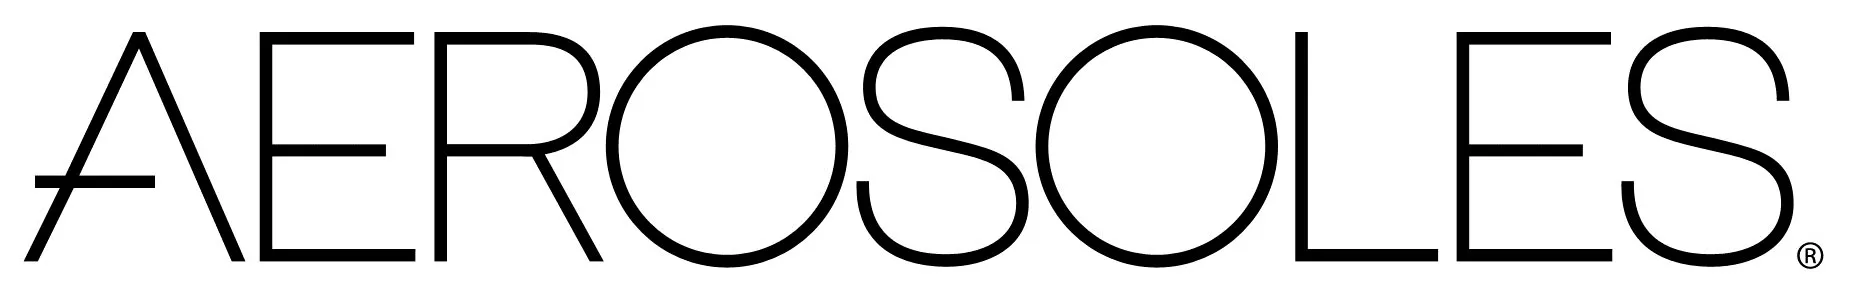 Logo for aerosoles